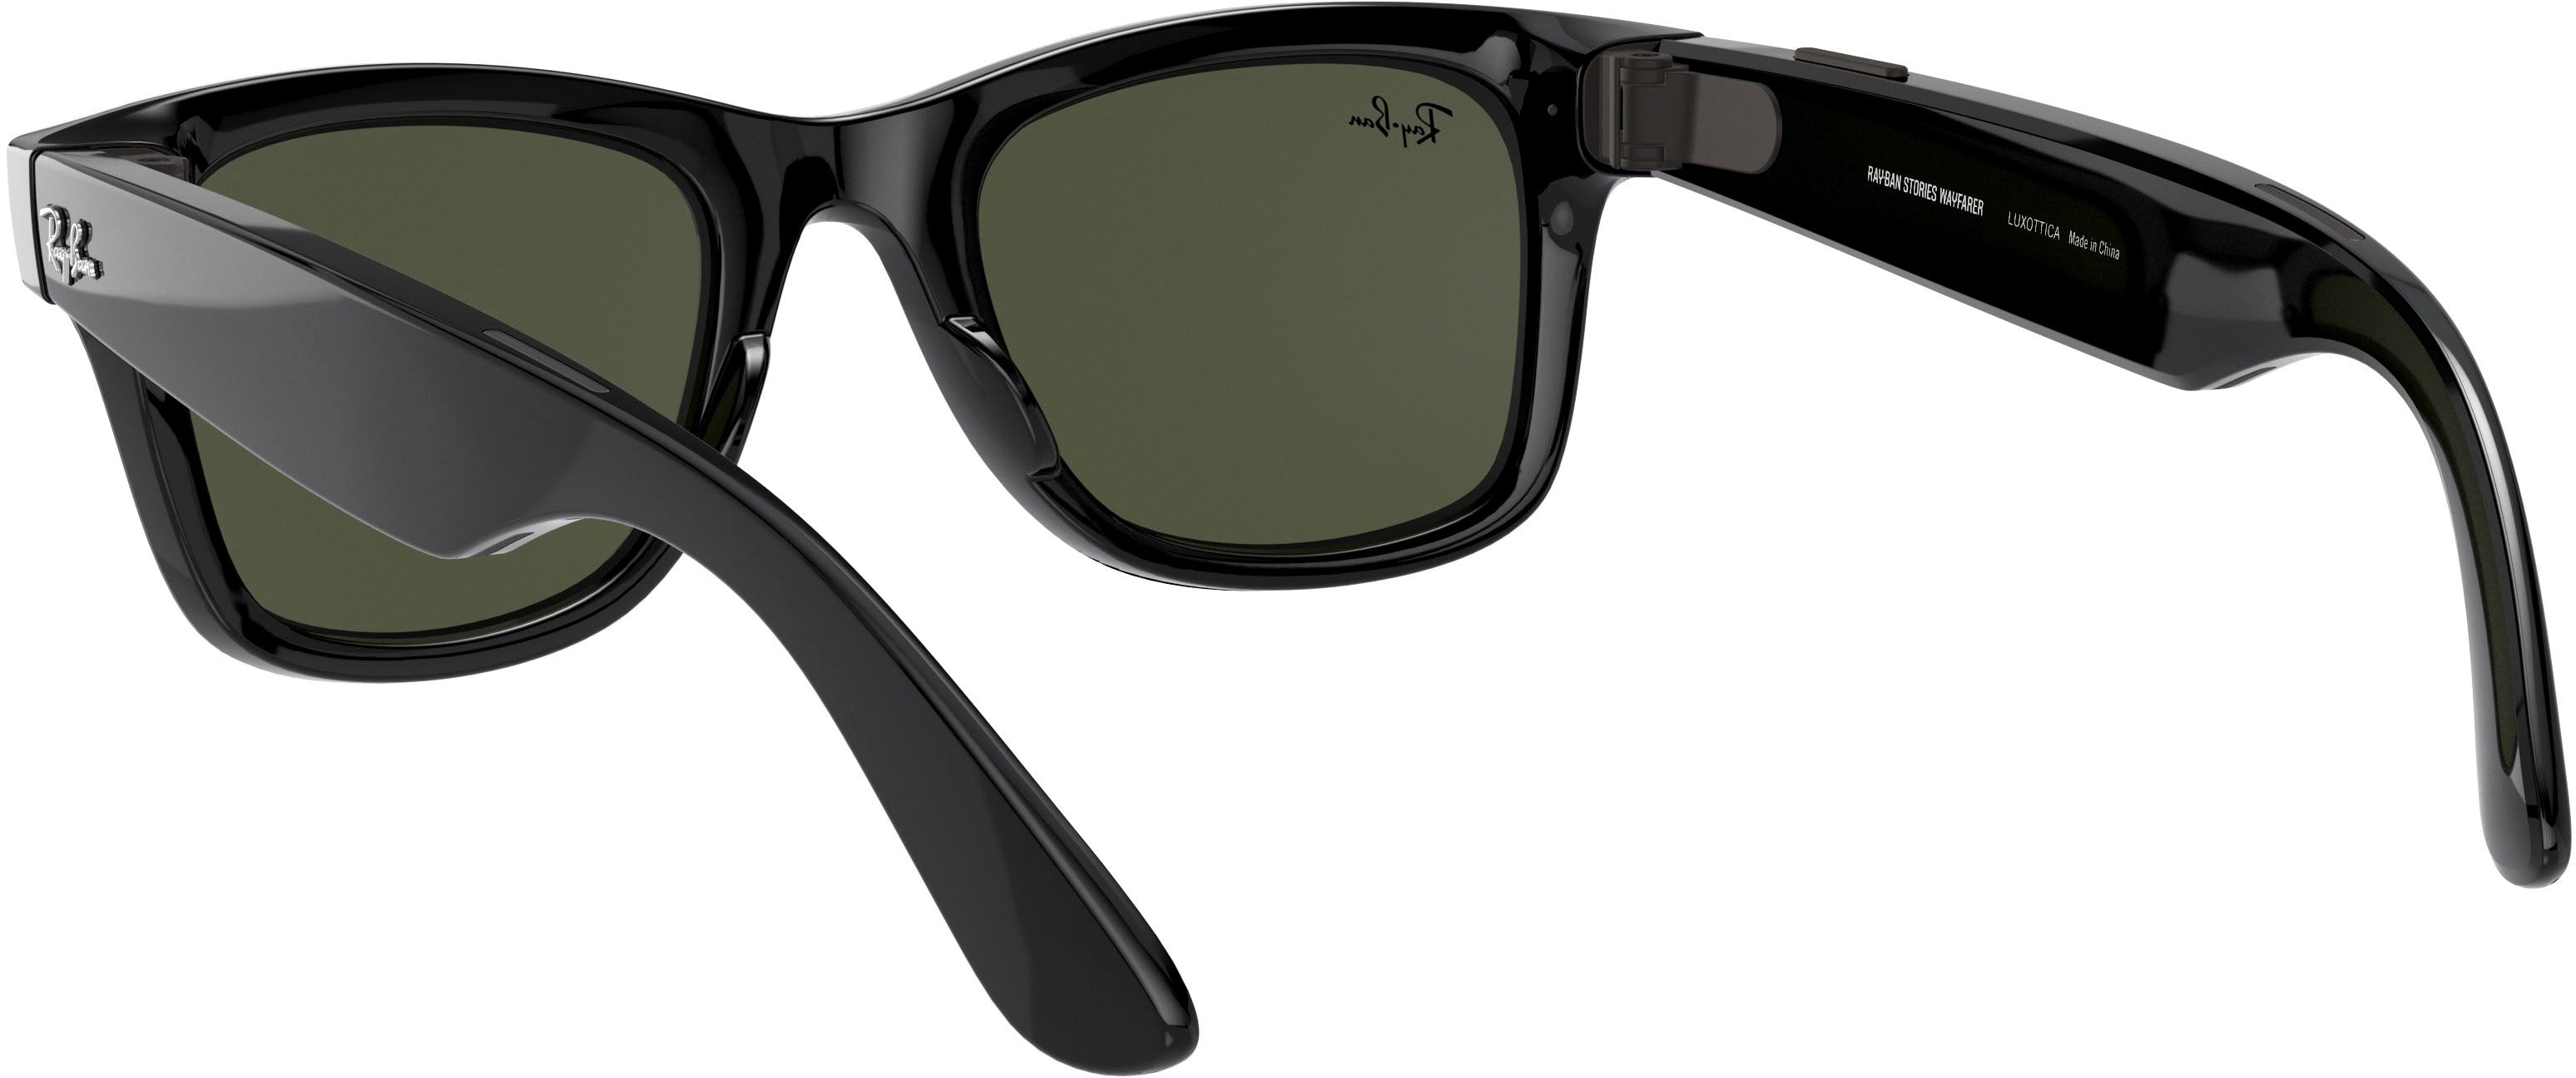 RAY-BAN STORIES WAYFARER Bluetooth Smart Glasses - Shiny Black/Green (New)